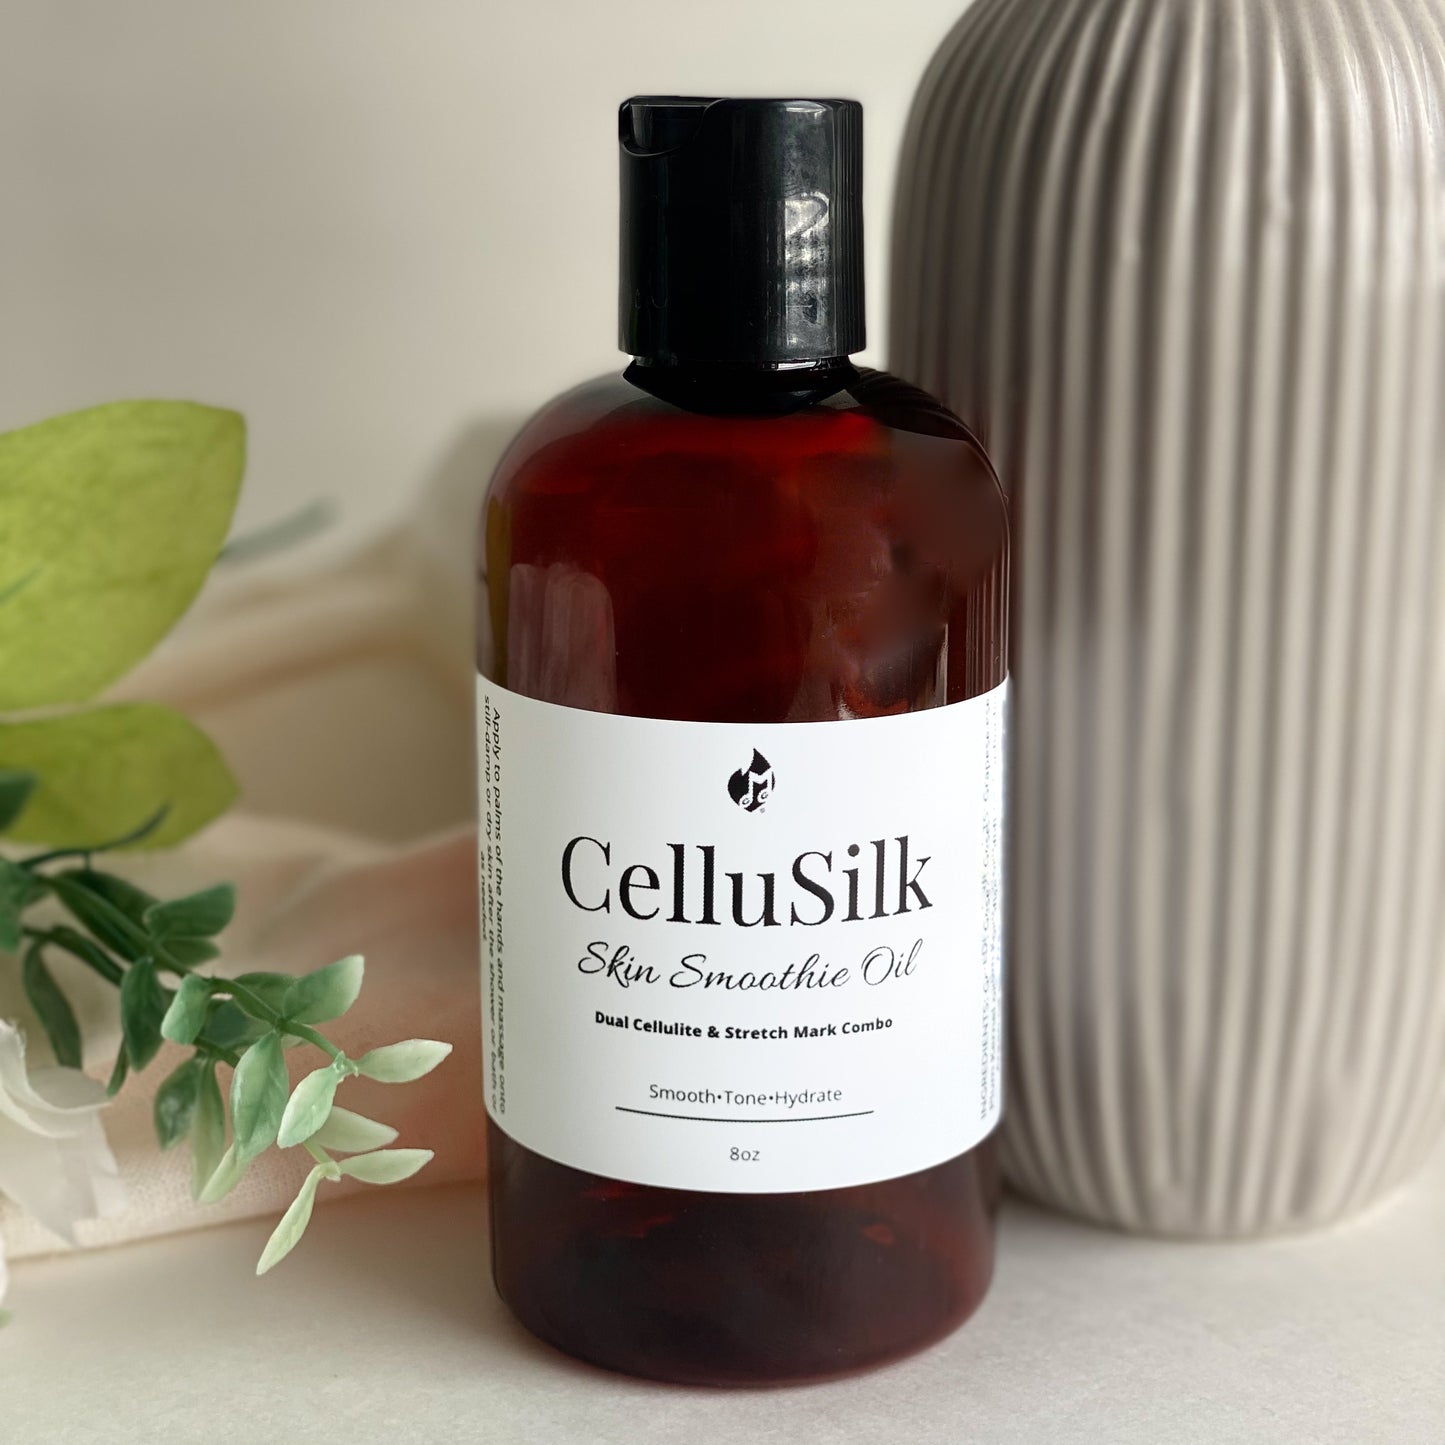 CelluSilk cellulite & stretch mark Skin Smoothie oil